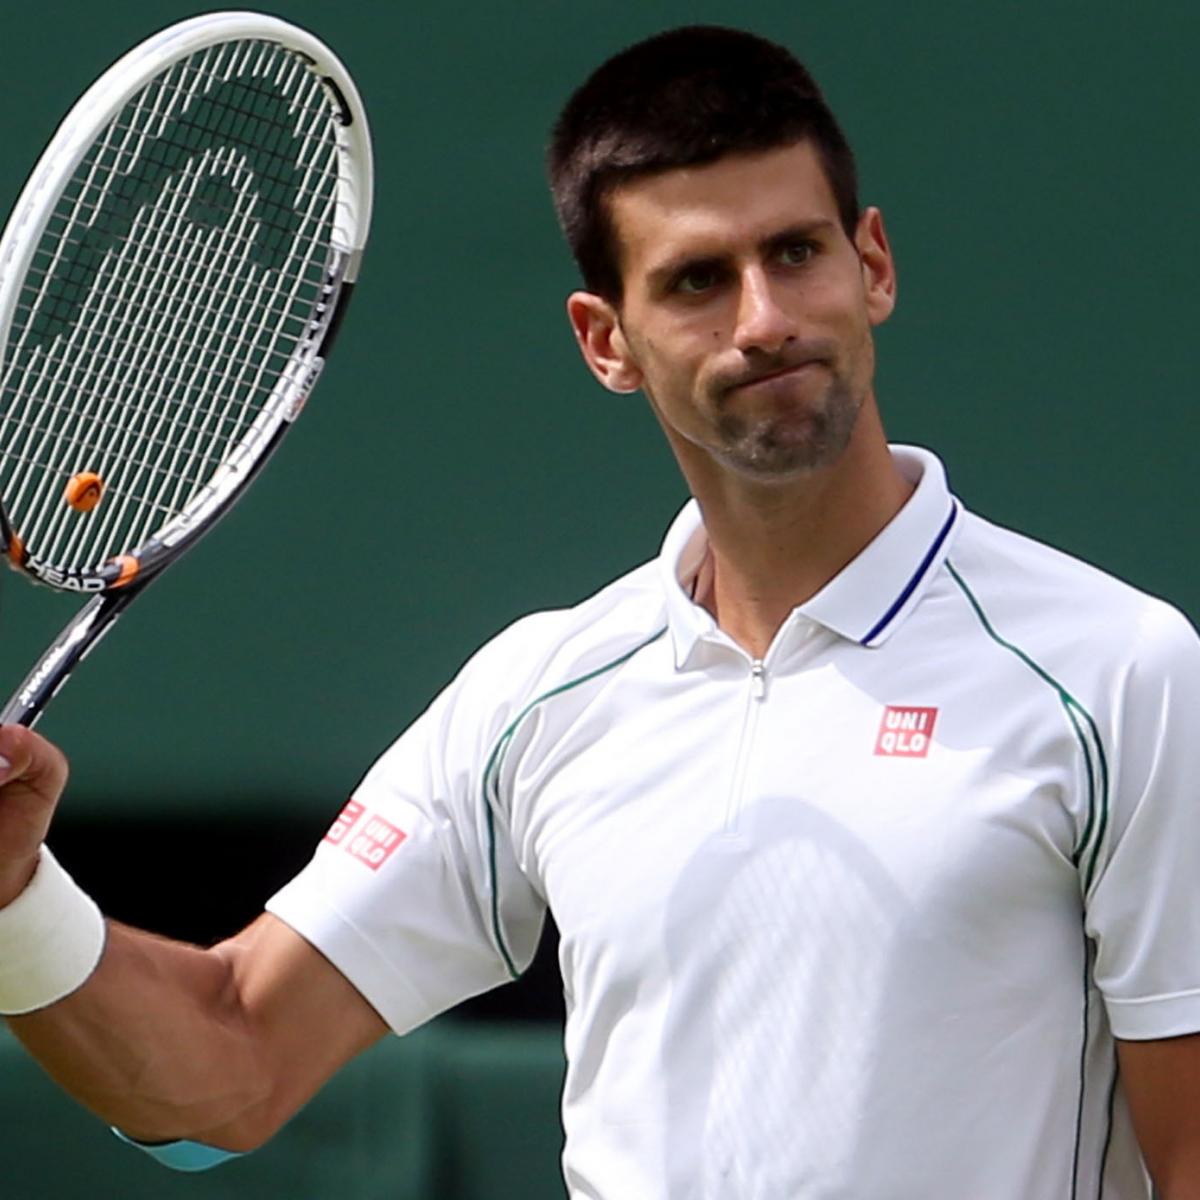 Novak Djokovic A Complete Guide to Djoker's 2012 Wimbledon Campaign